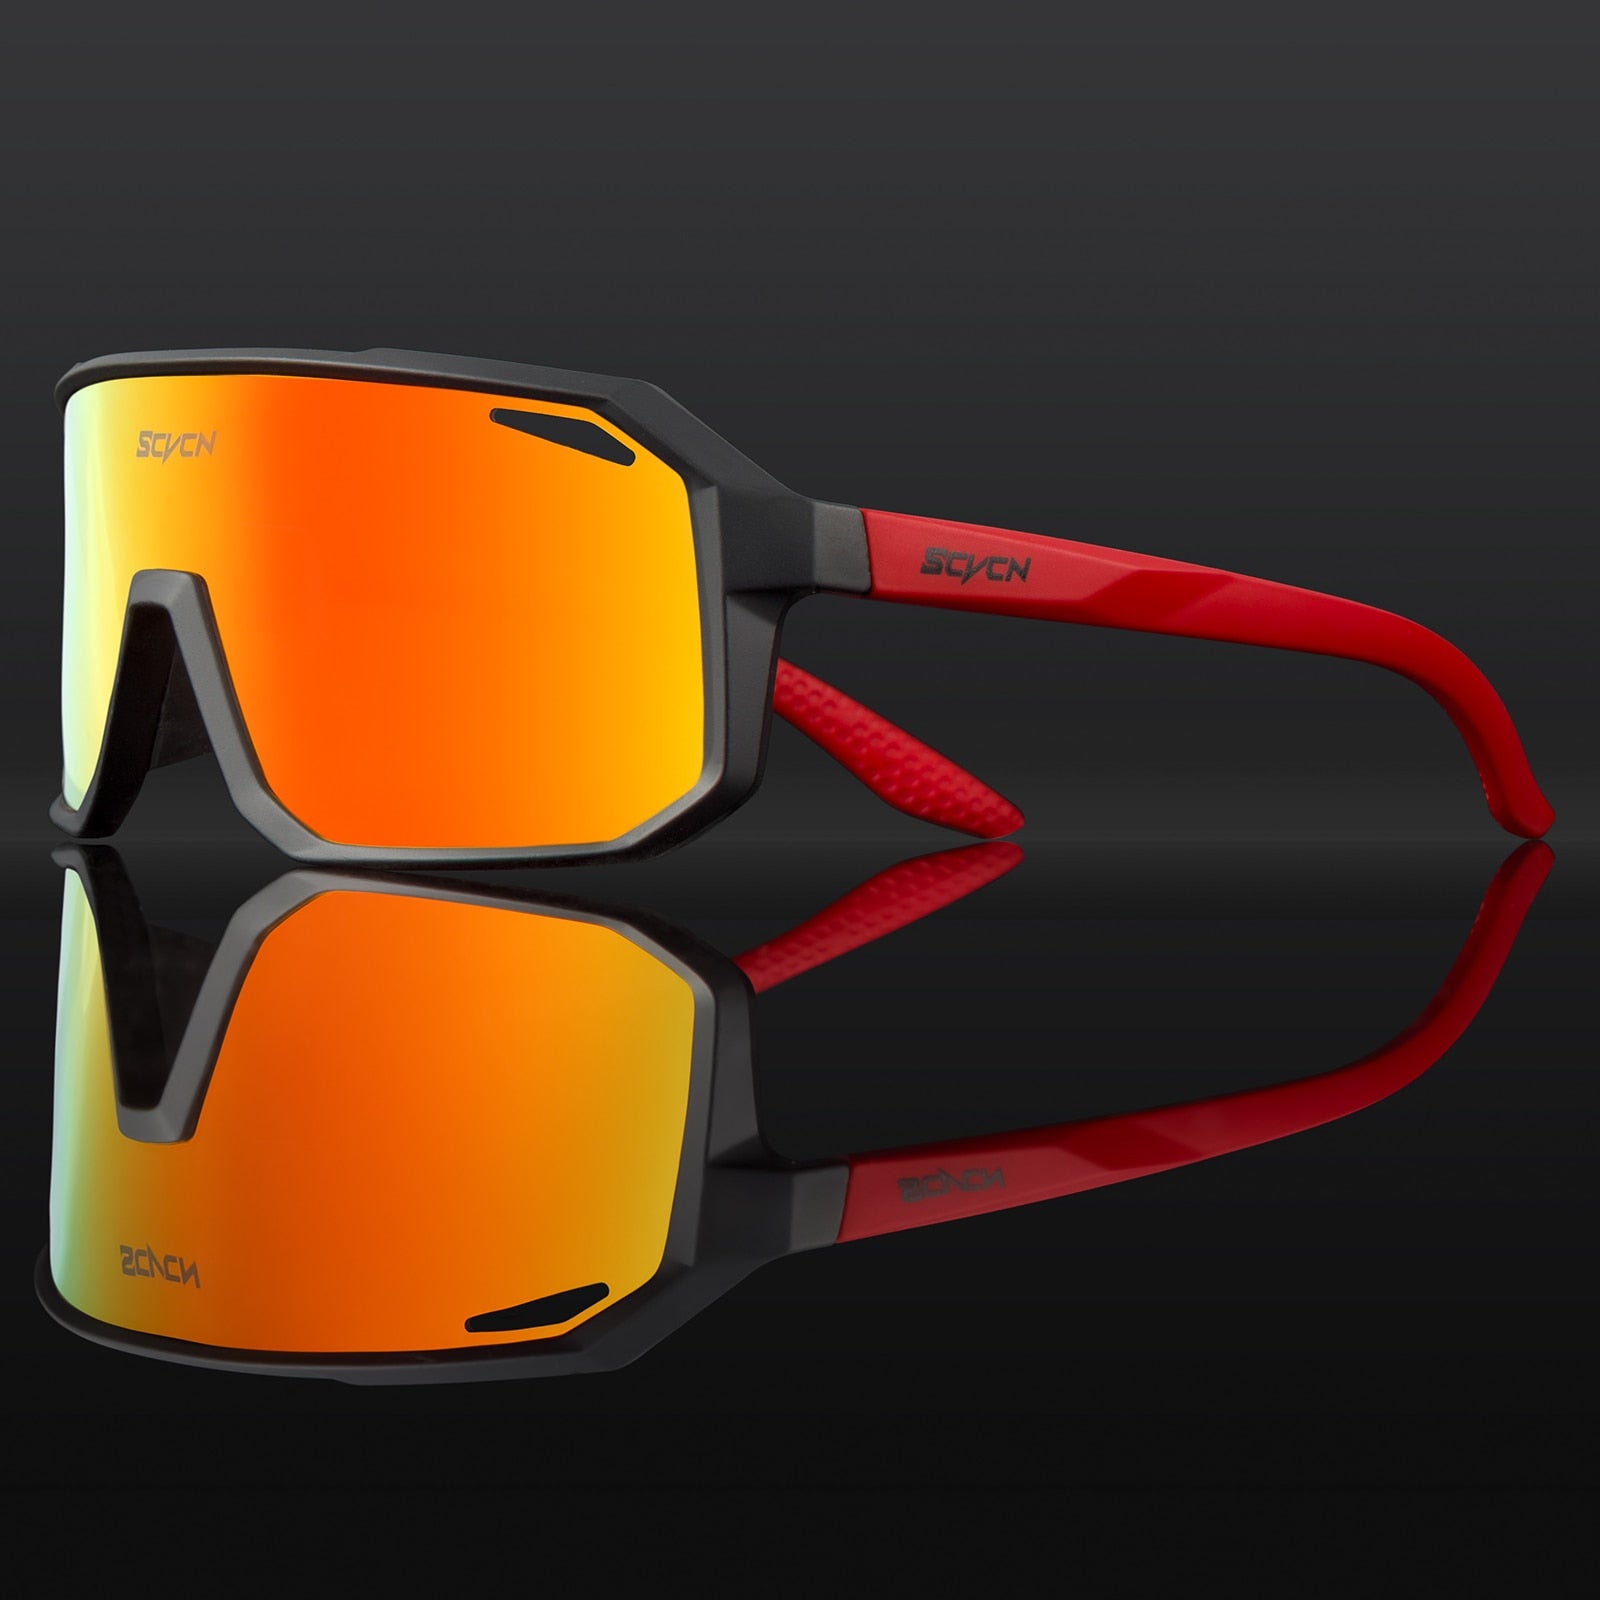 360° sports glasses "Fast"